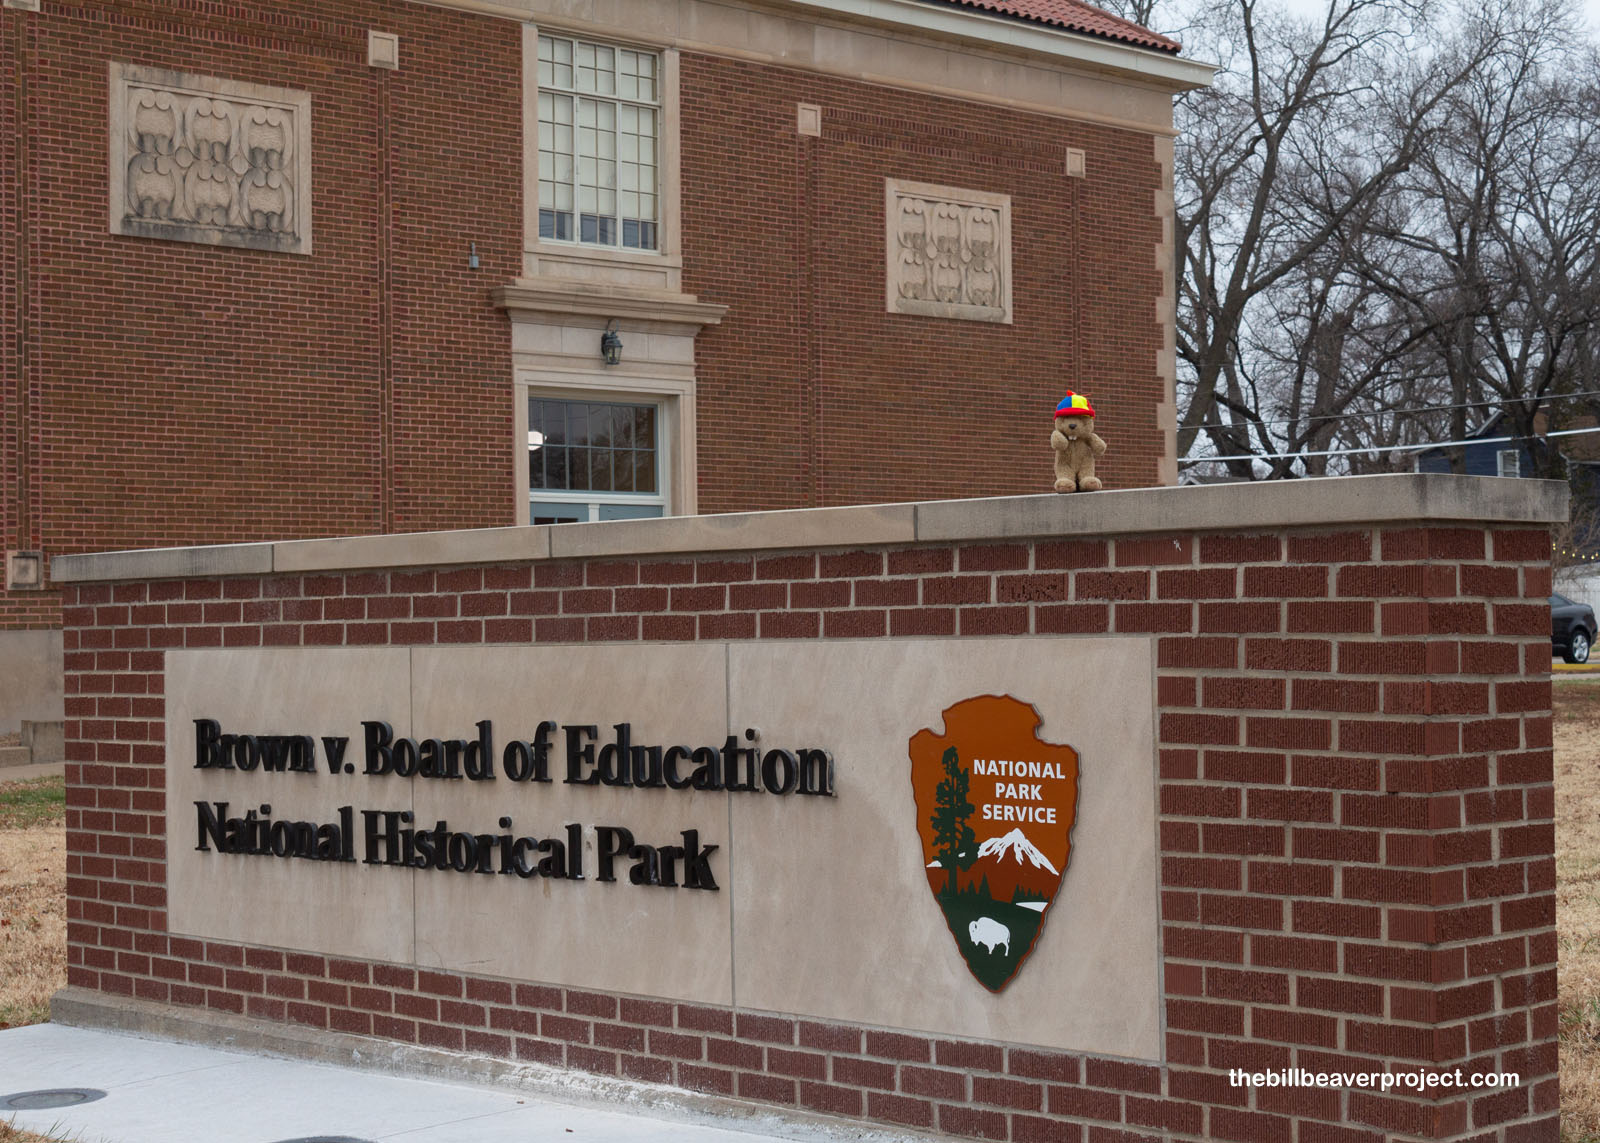 Brown v. Board of Education National Historical Park